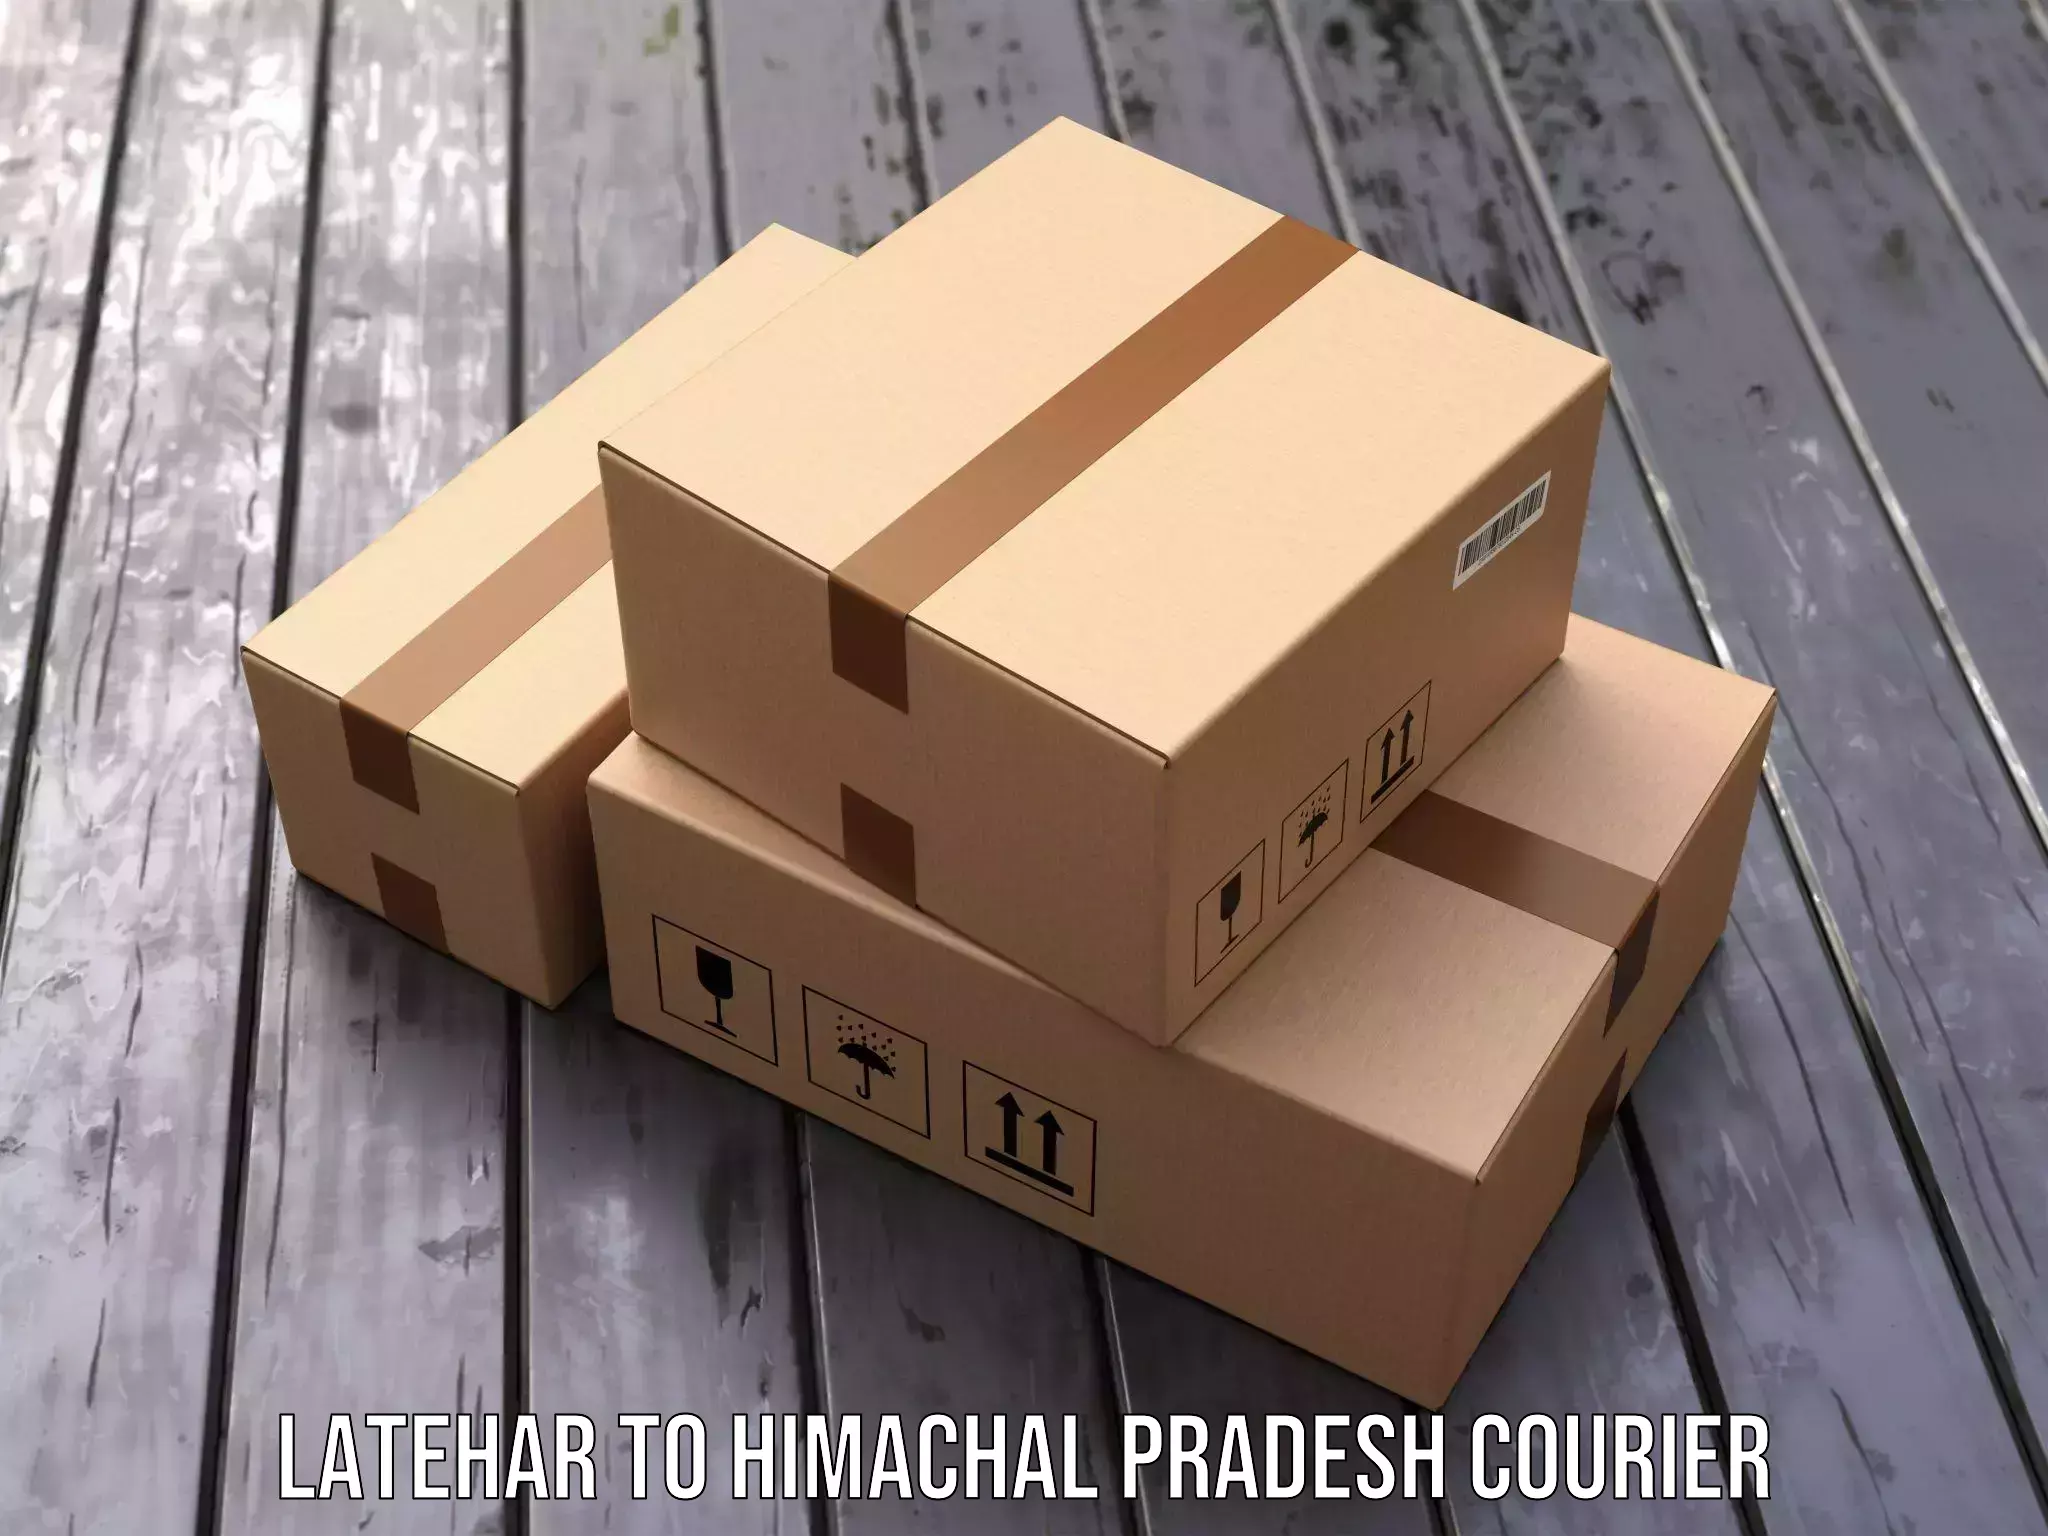 Urgent courier needs Latehar to Jawali